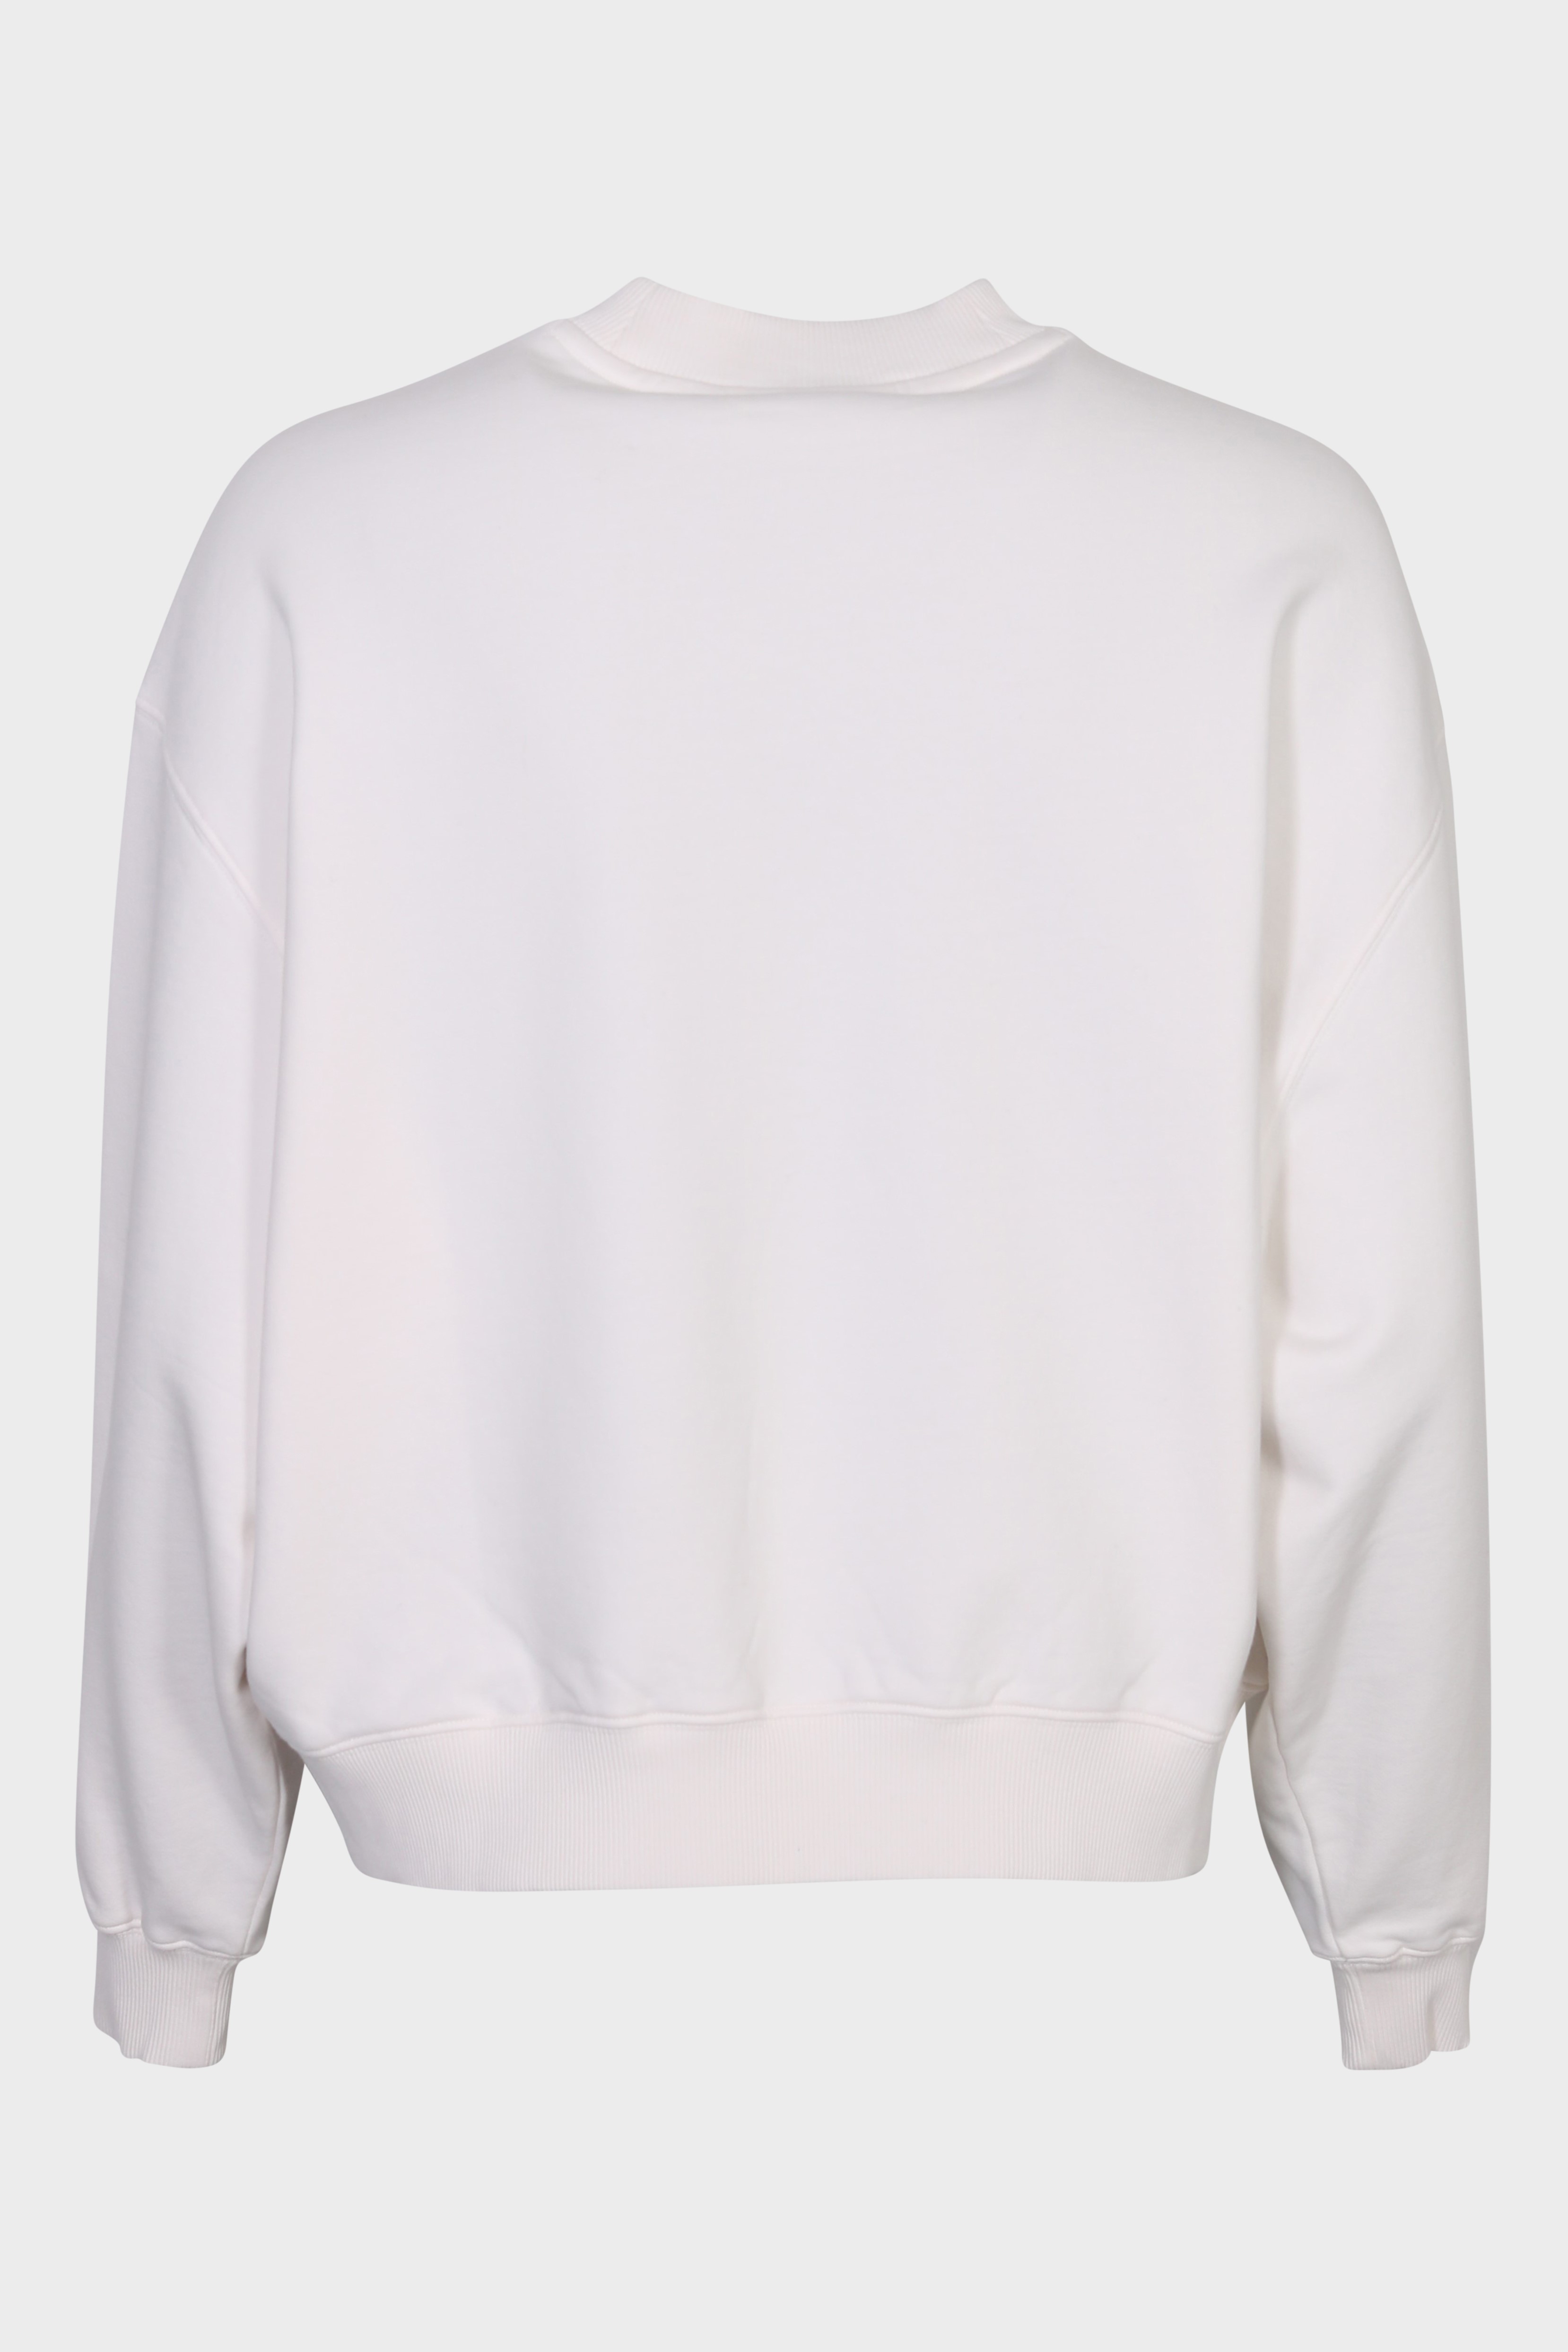 AXEL ARIGATO University Sweatshirt in Off White L